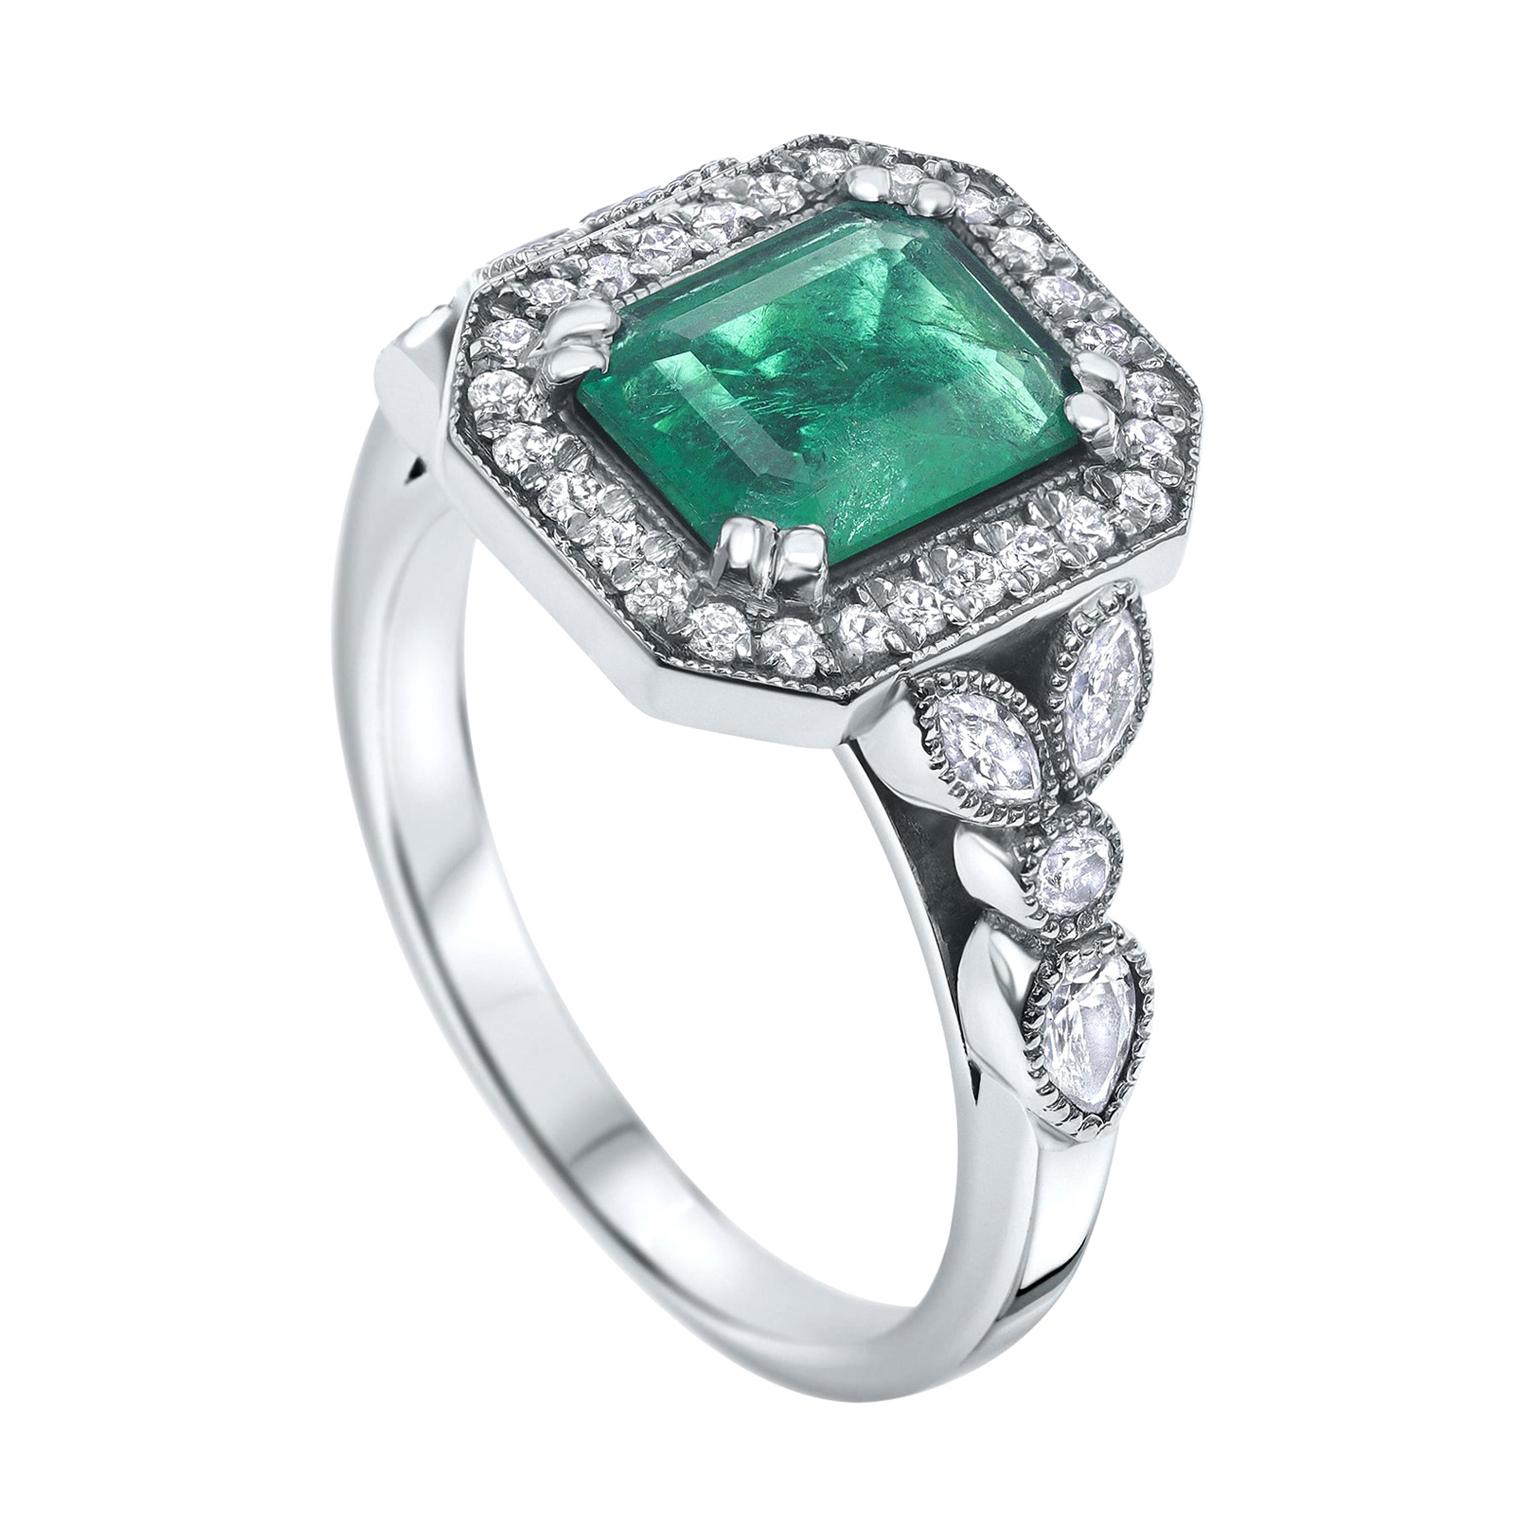 2.53 Carat Emerald & Diamond Ring in 14 Karat White Gold, Shlomit Rogel For Sale